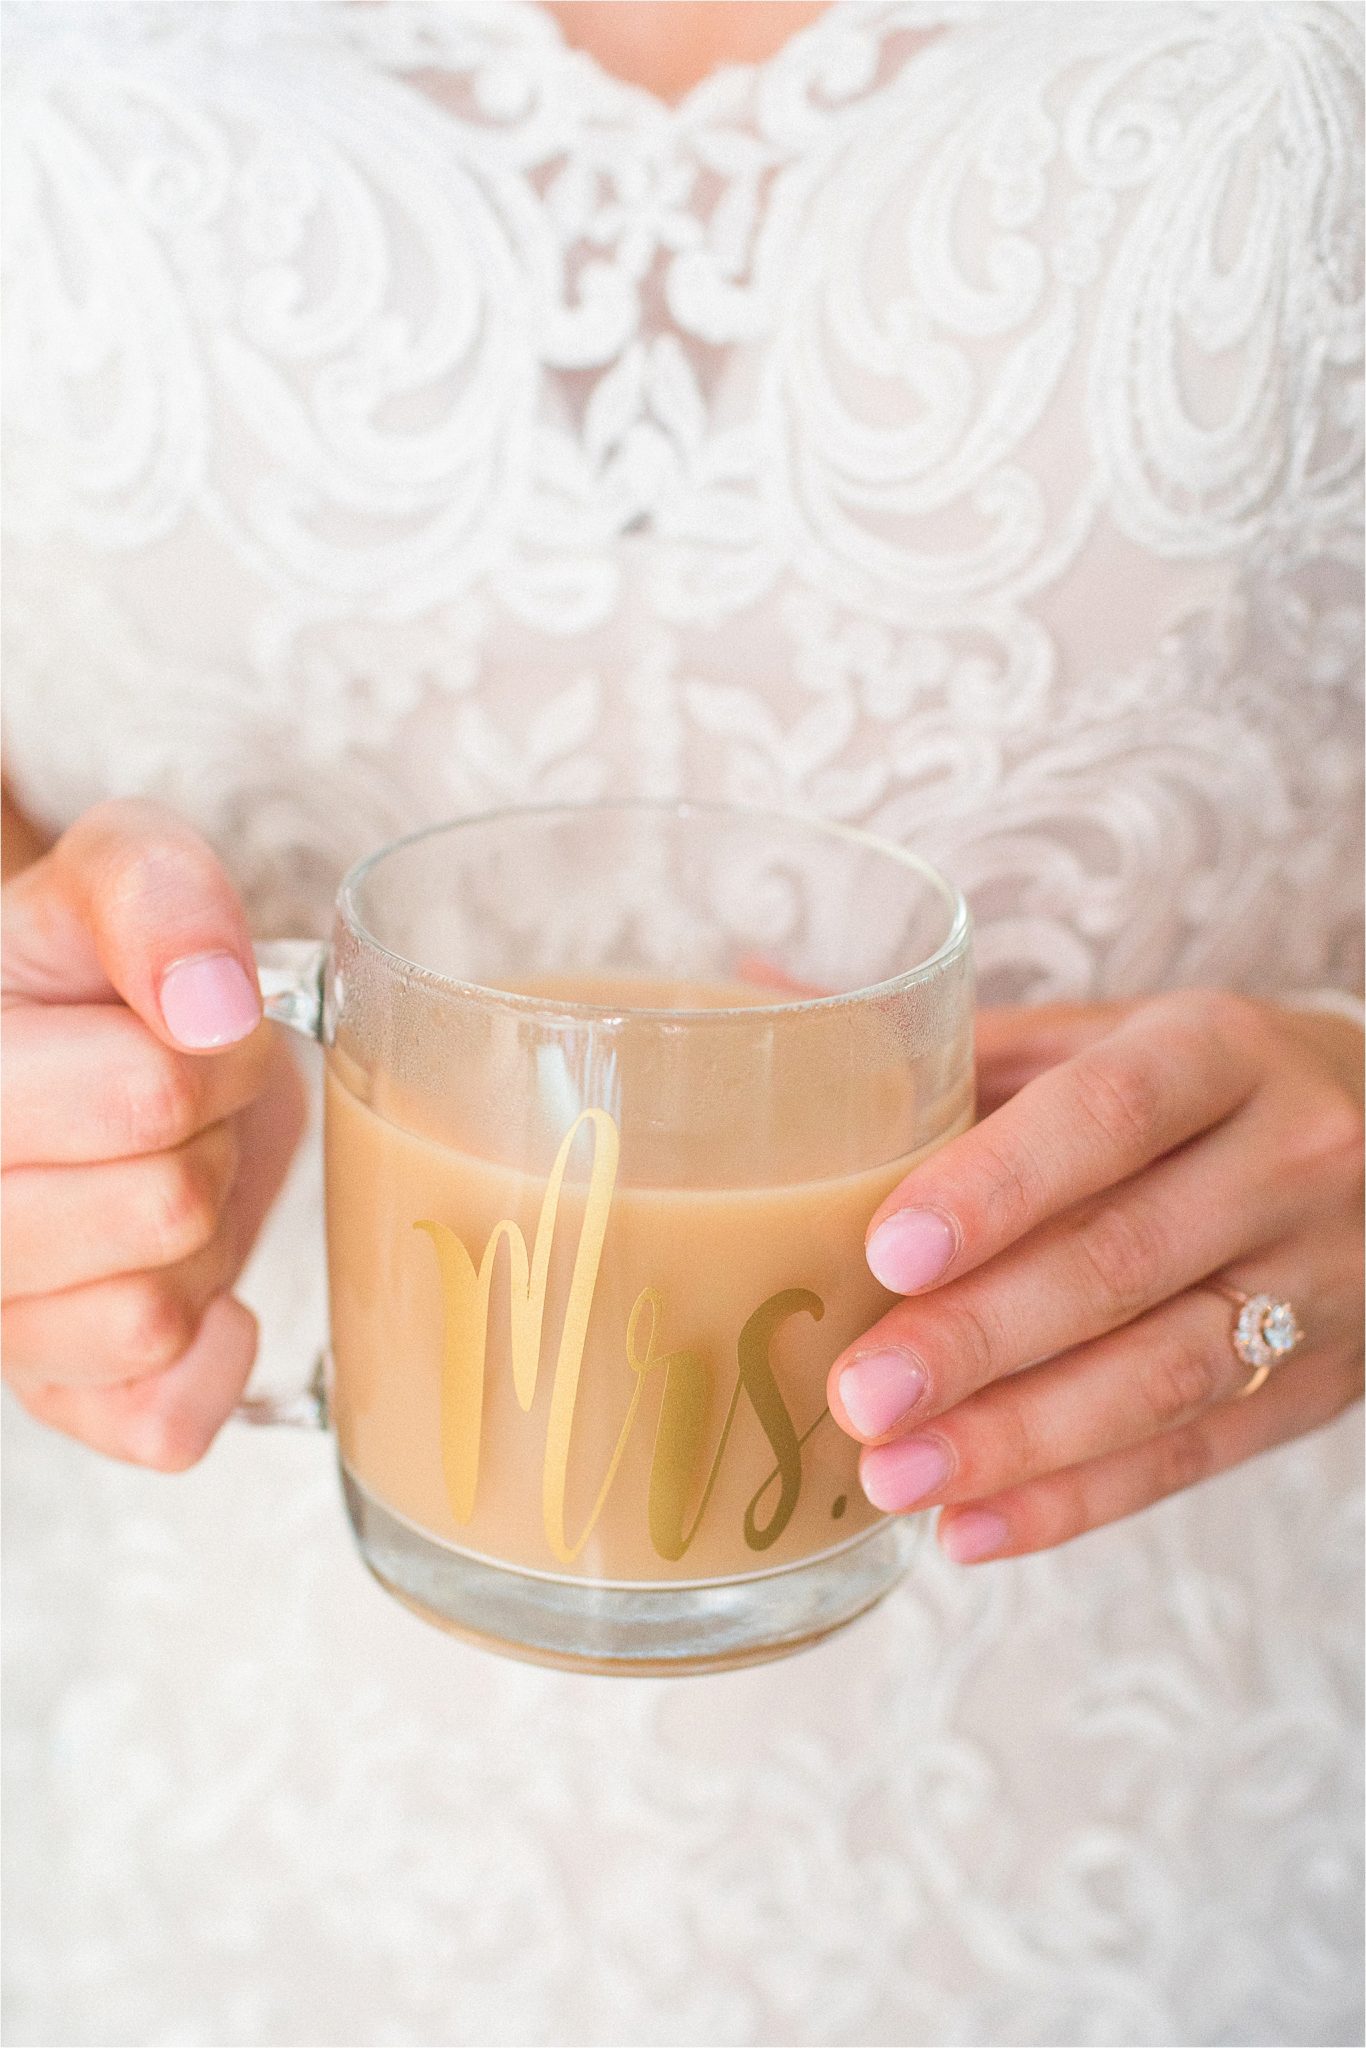 Mrs.-Mug-glass-lace-wedding-dresses-gold-cursive-coffee-reception